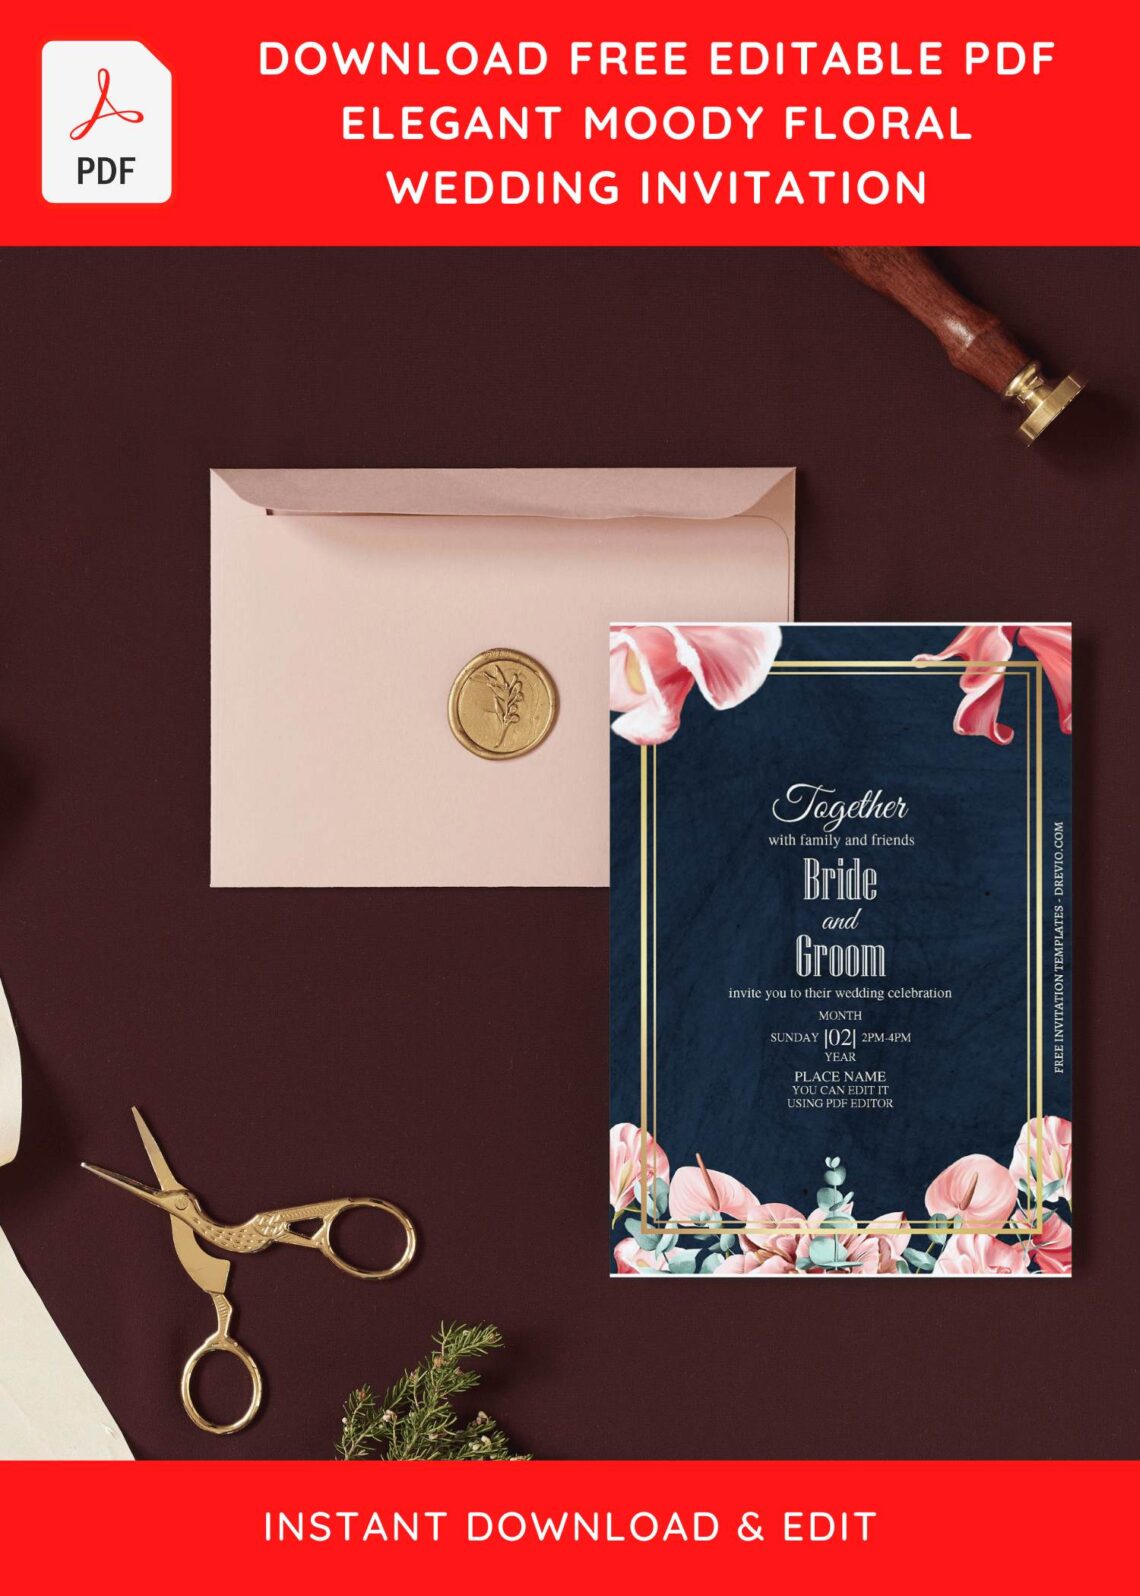 (Free Editable PDF) Elegant Moody Tulip And Lily Wedding Invitation Templates